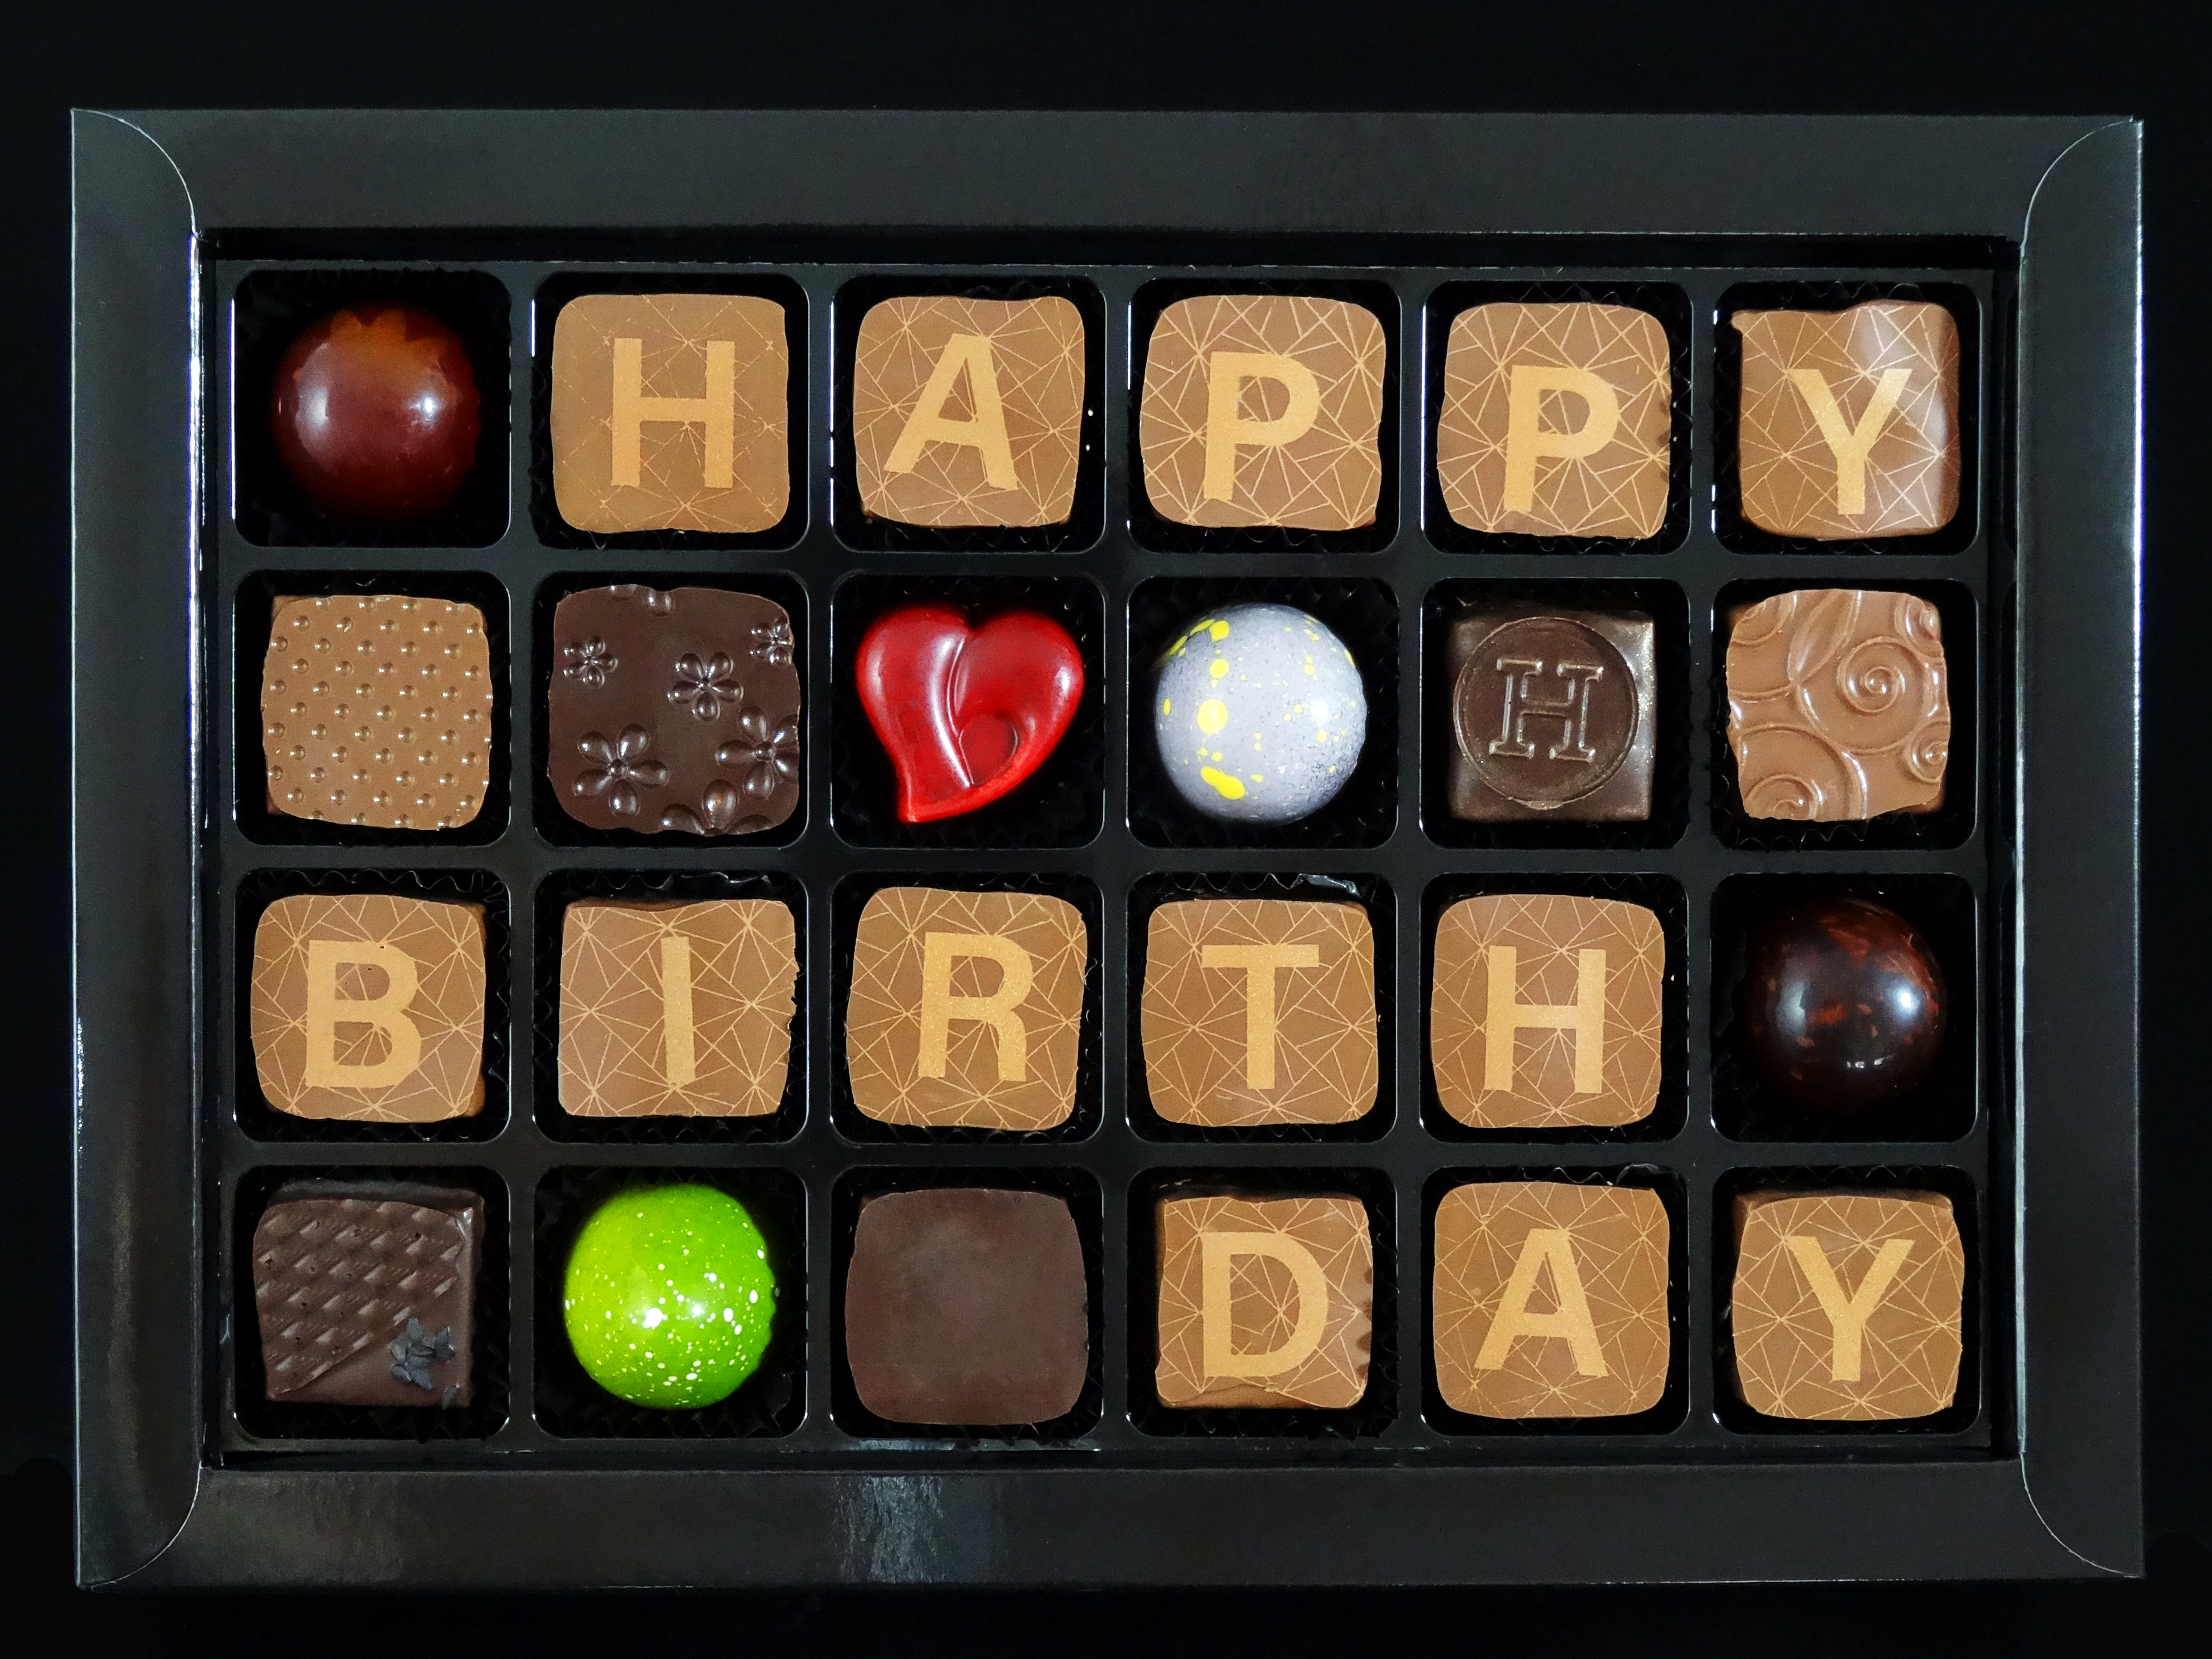 Chocolate Message "Happy Birthday"